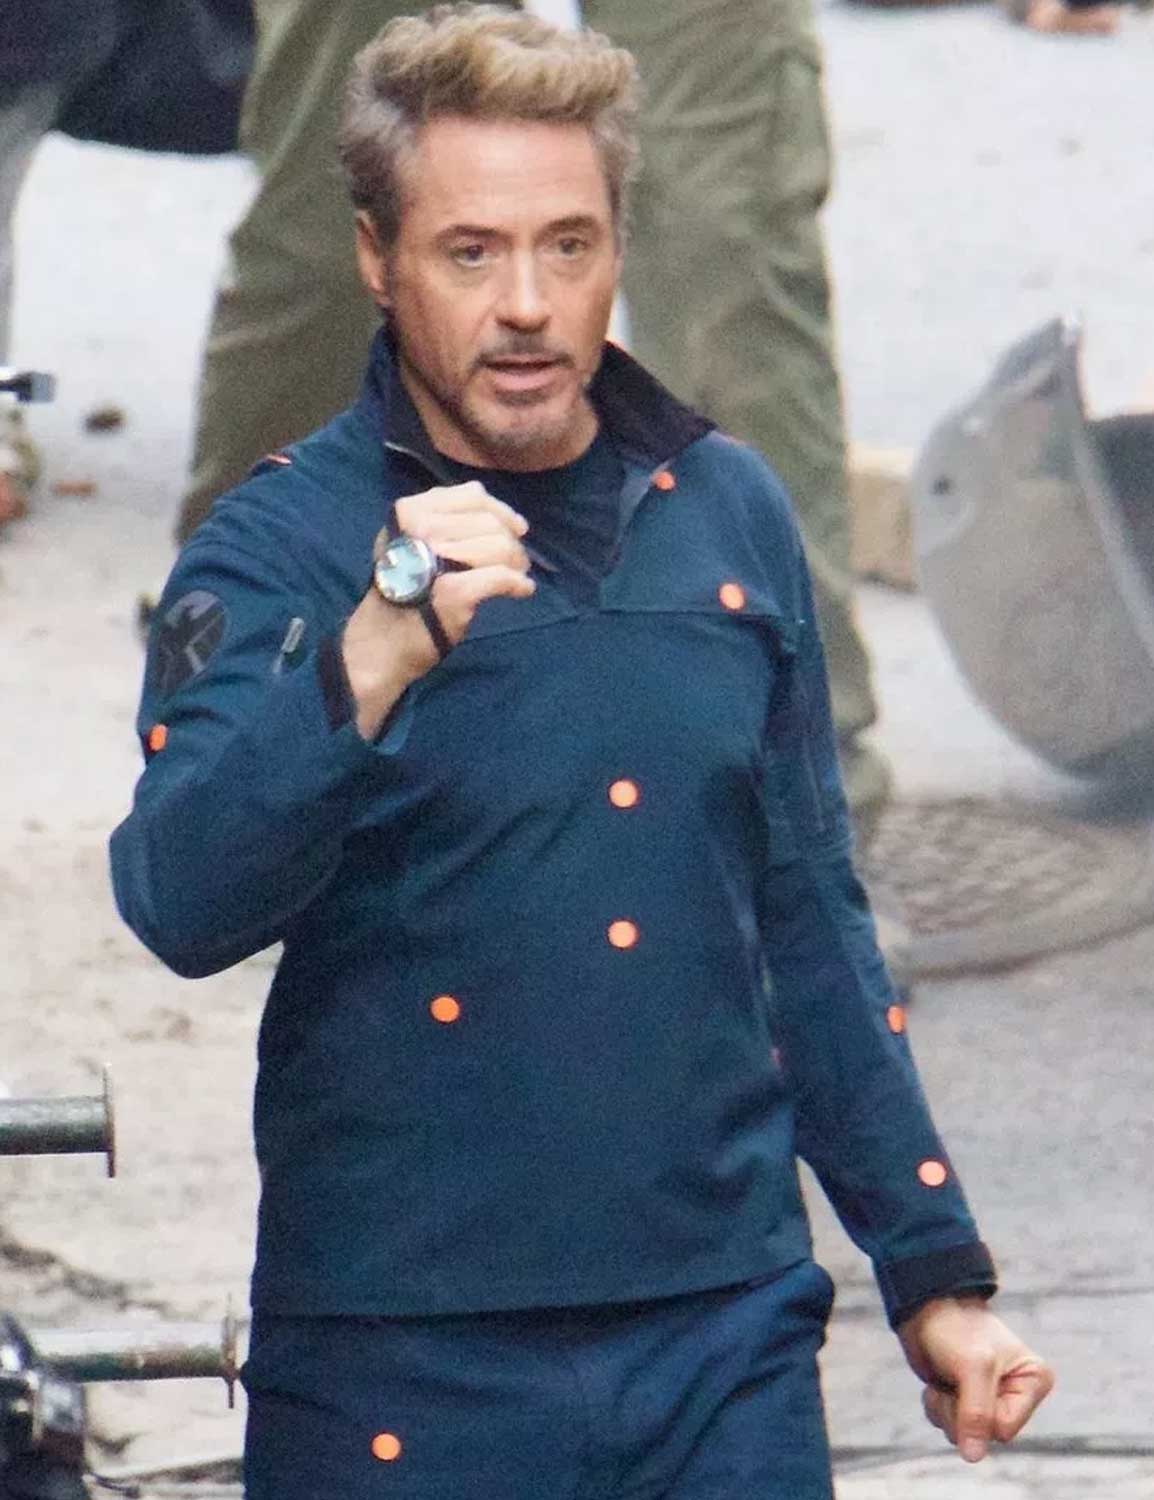 Tony-Stark-Avengers-Endgame-Jacket-1